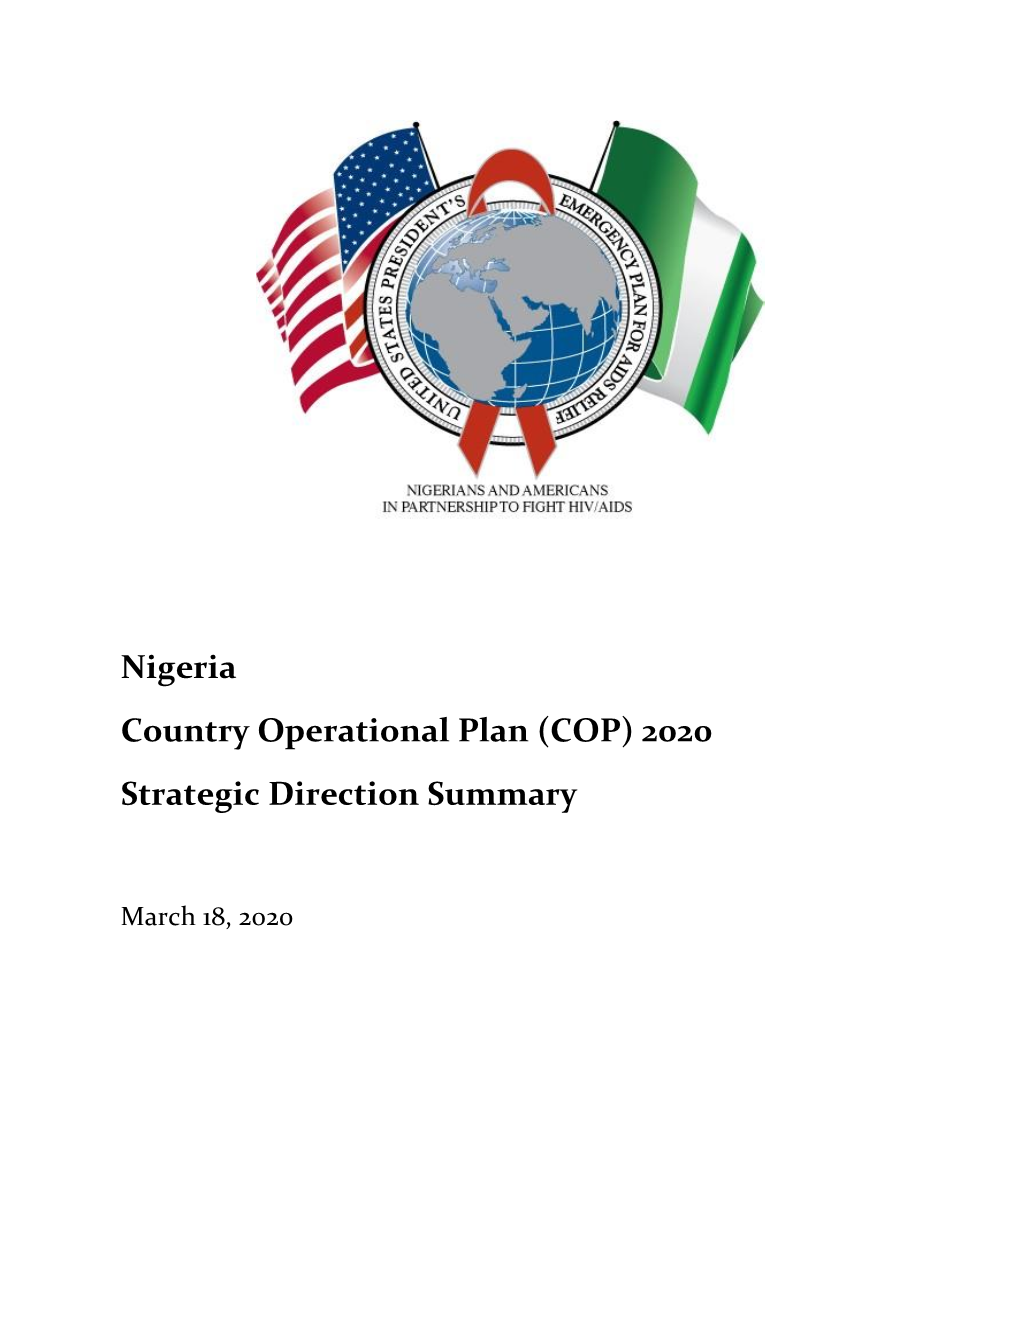 Nigeria Country Operational Plan (COP) 2020 Strategic Direction Summary